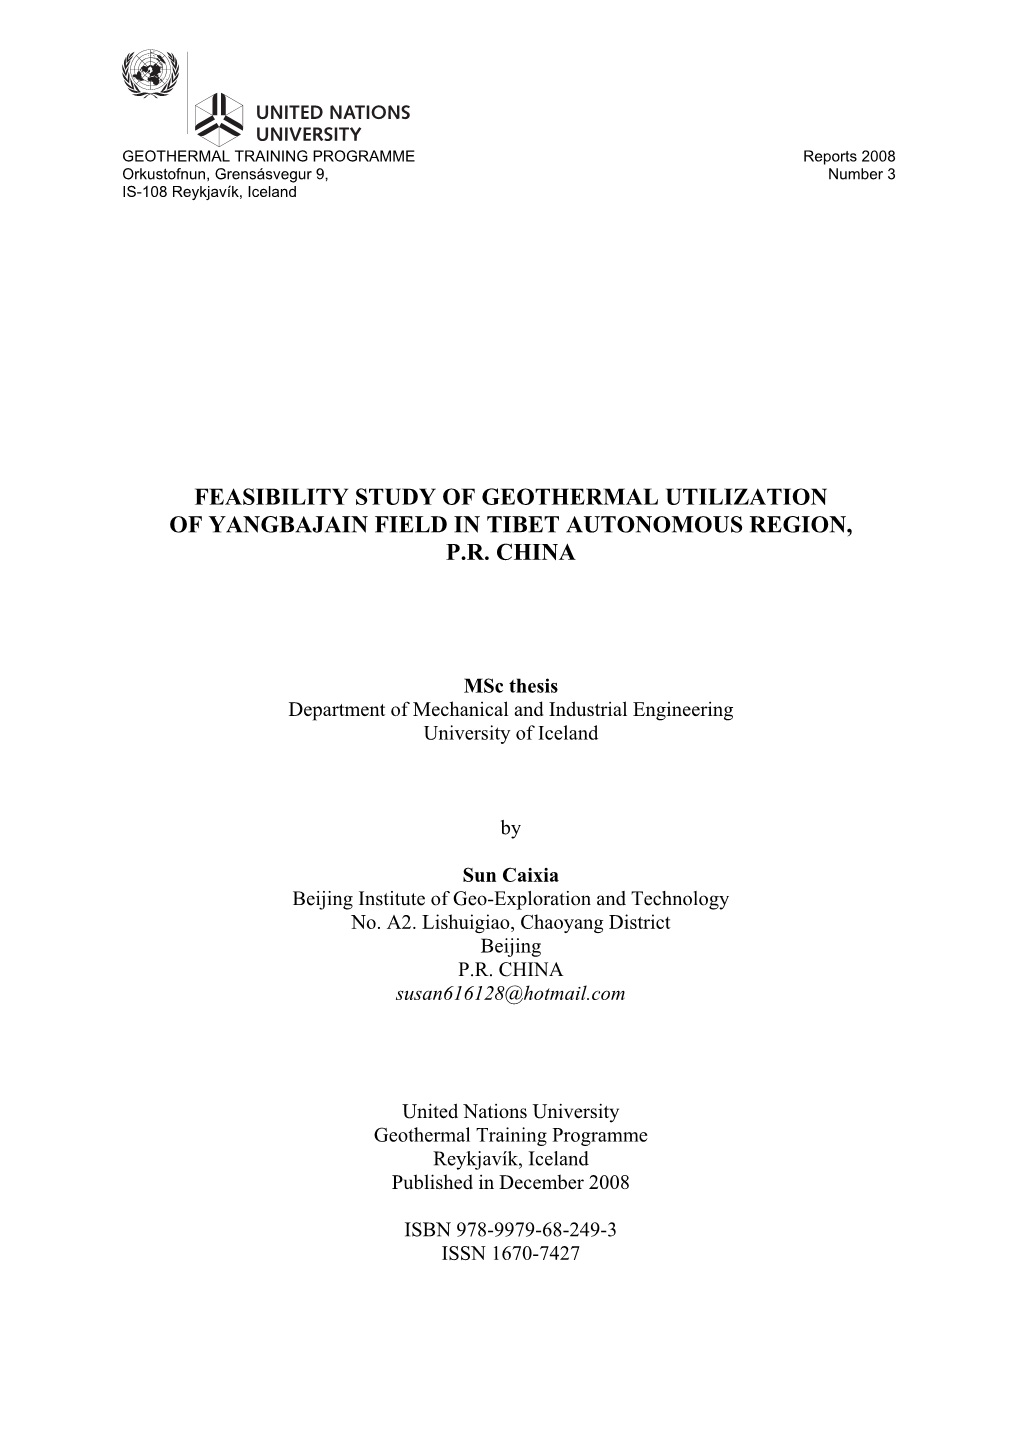 Feasibility Study of Geothermal Utilization of Yangbajain Field in Tibet Autonomous Region, P.R